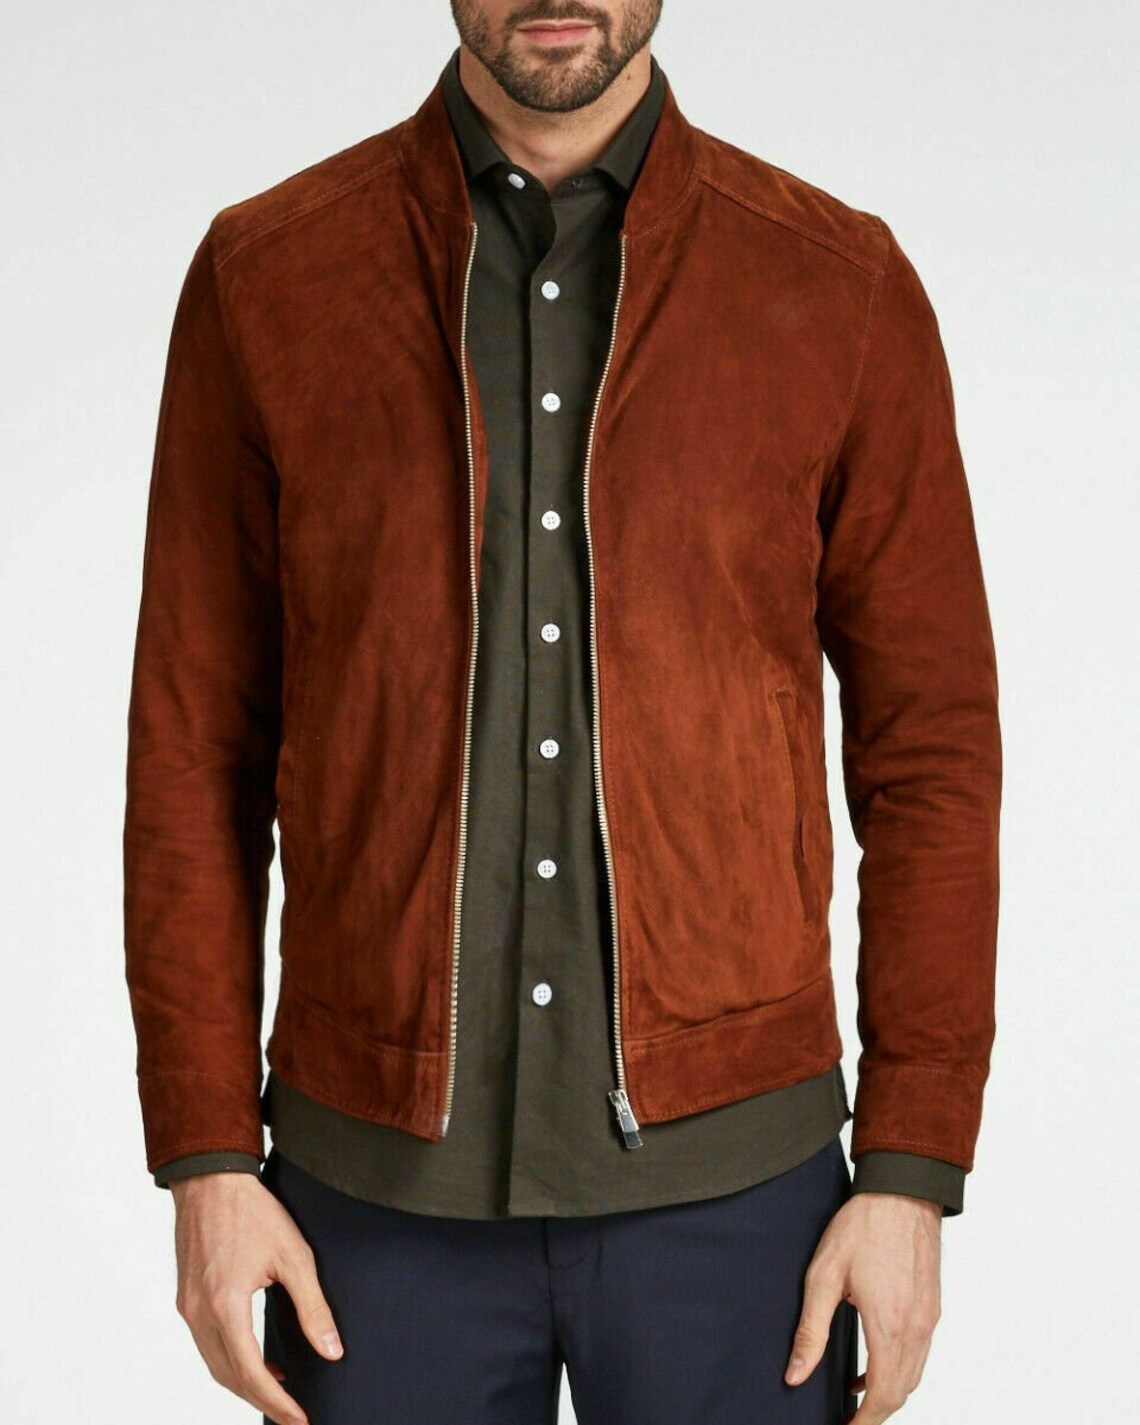 New Men's Sheepskin Suede 100% Leather Jacket Biker Brown | Etsy